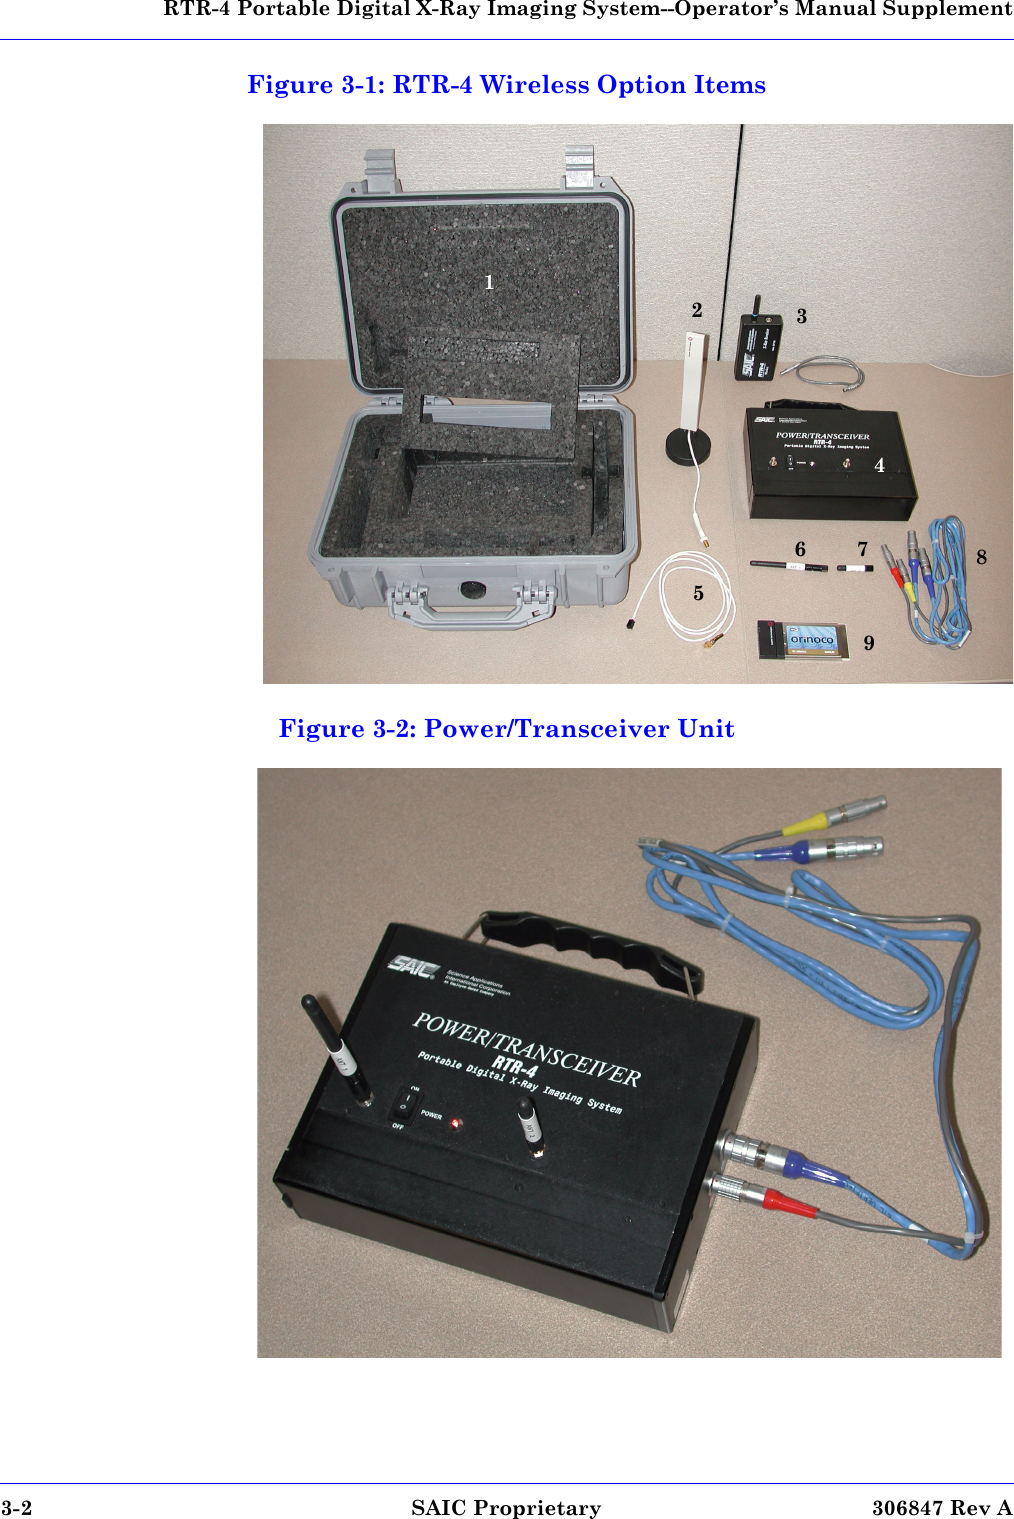   RTR-4 Portable Digital X-Ray Imaging System--Operator’s Manual Supplement3-2 SAIC Proprietary 306847 Rev AFigure 3-1: RTR-4 Wireless Option ItemsFigure 3-2: Power/Transceiver Unit1234567 89